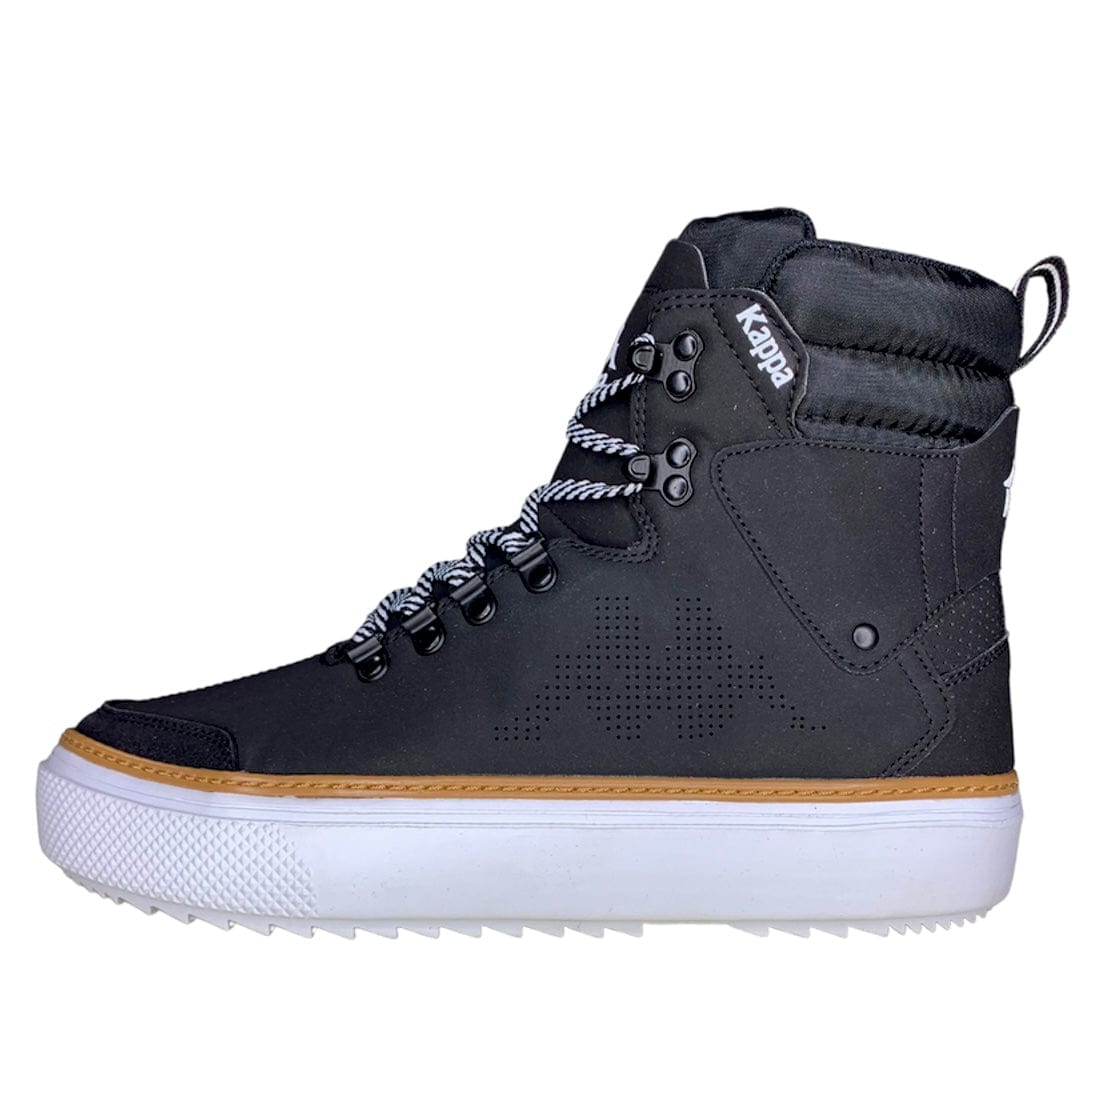 – 331G4IW-A0U (Black/White) 2 Authentic Boots Man Istrid City Kappa Sneaker USA